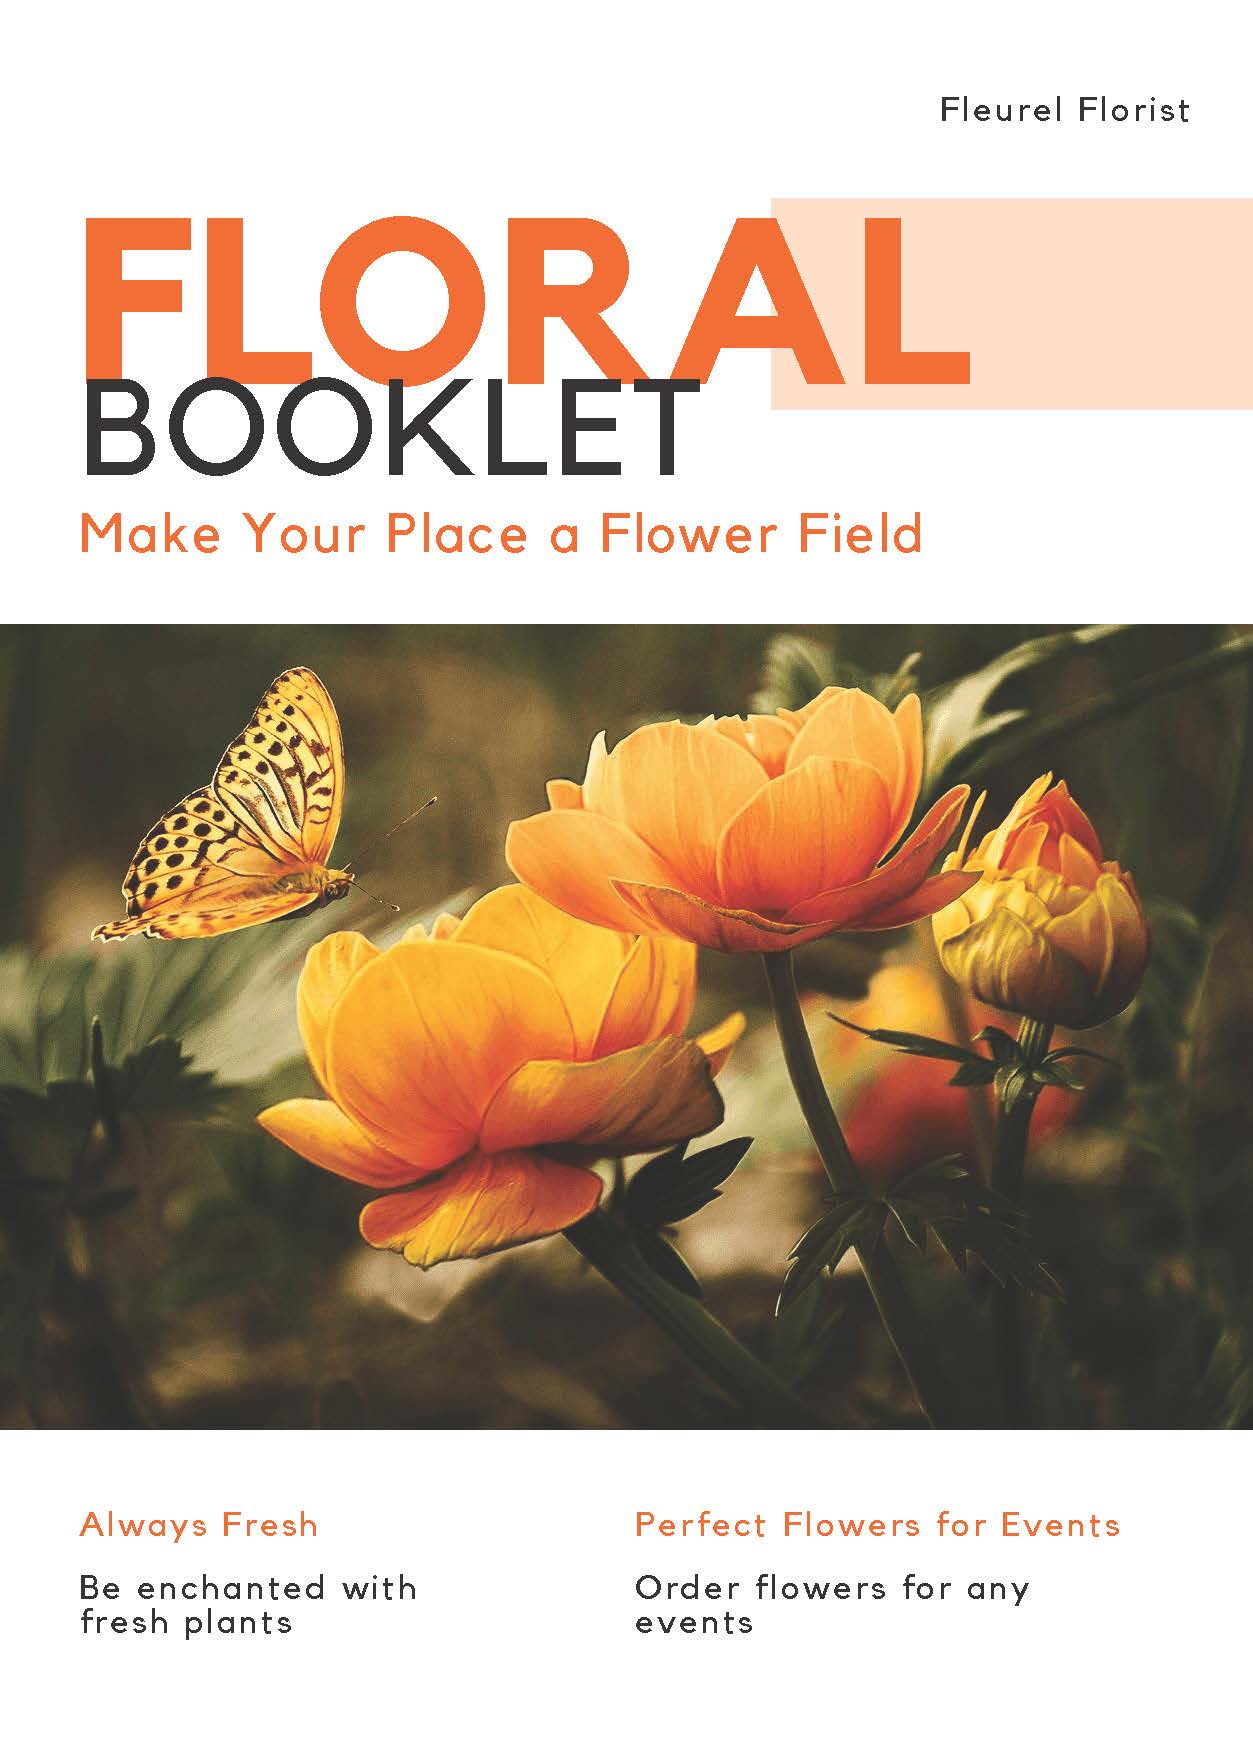 Floral Booklet Template in Word, Google Docs, Illustrator, PSD, Apple Pages, Publisher, InDesign